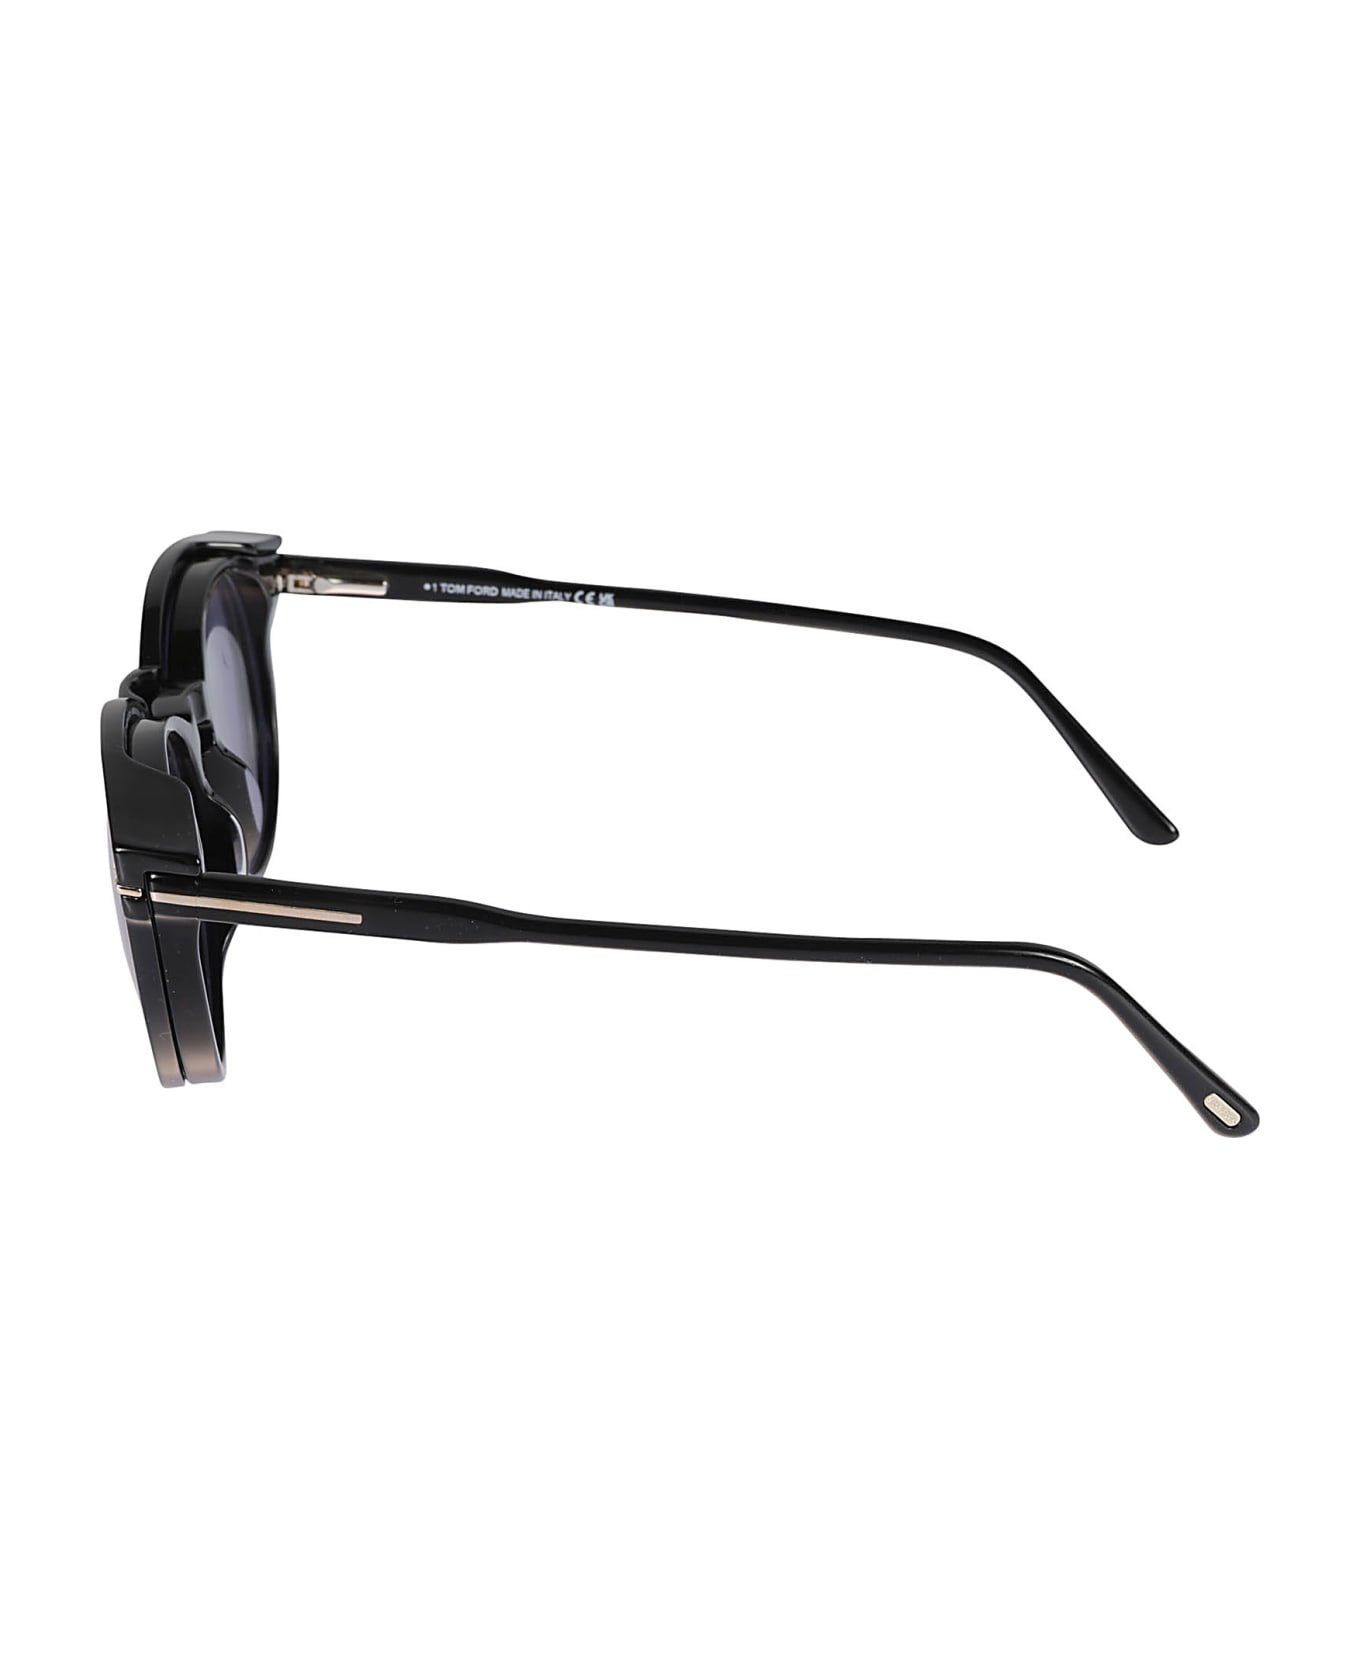 Tom Ford Eyewear Classic Round Lens Sunglasses - 001